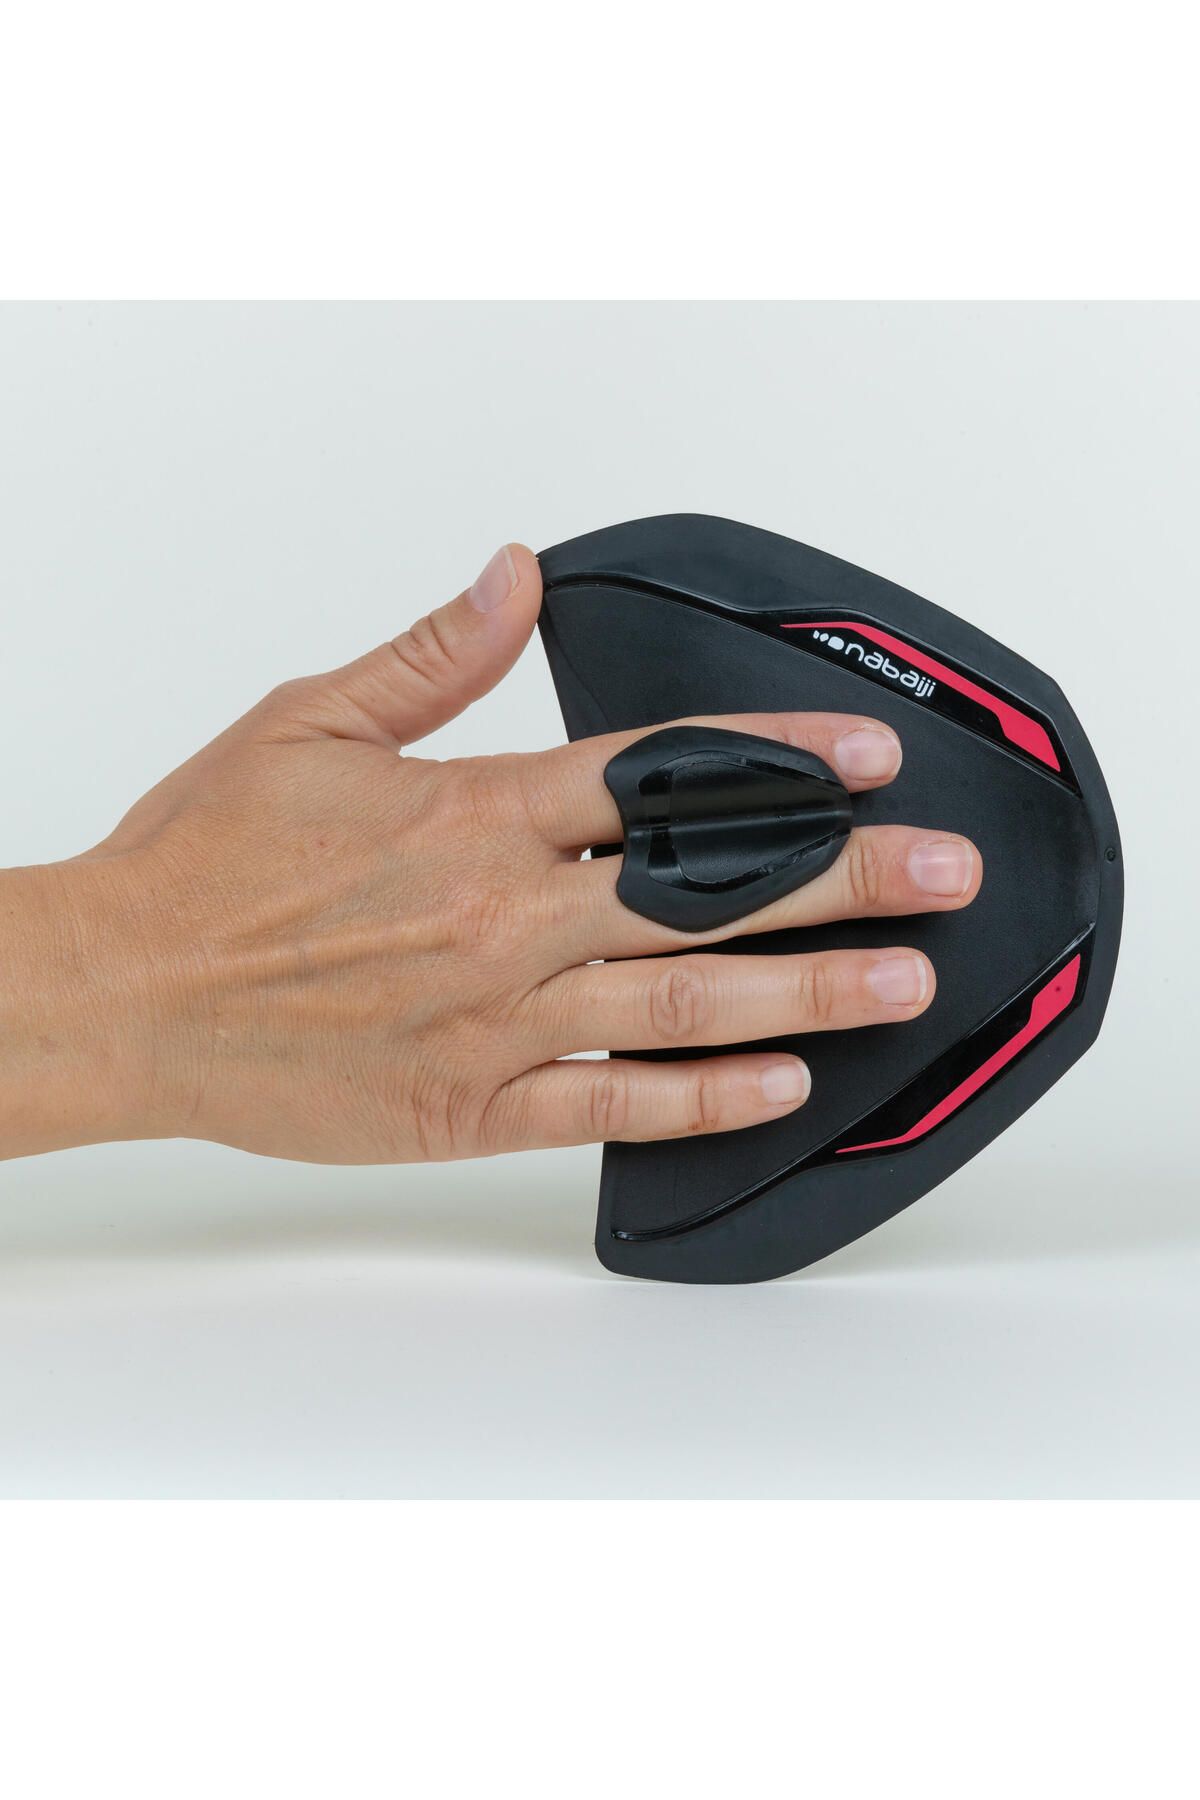 Decathlon Finger Paddle El Paleti - Siyah/Kırmızı - 900